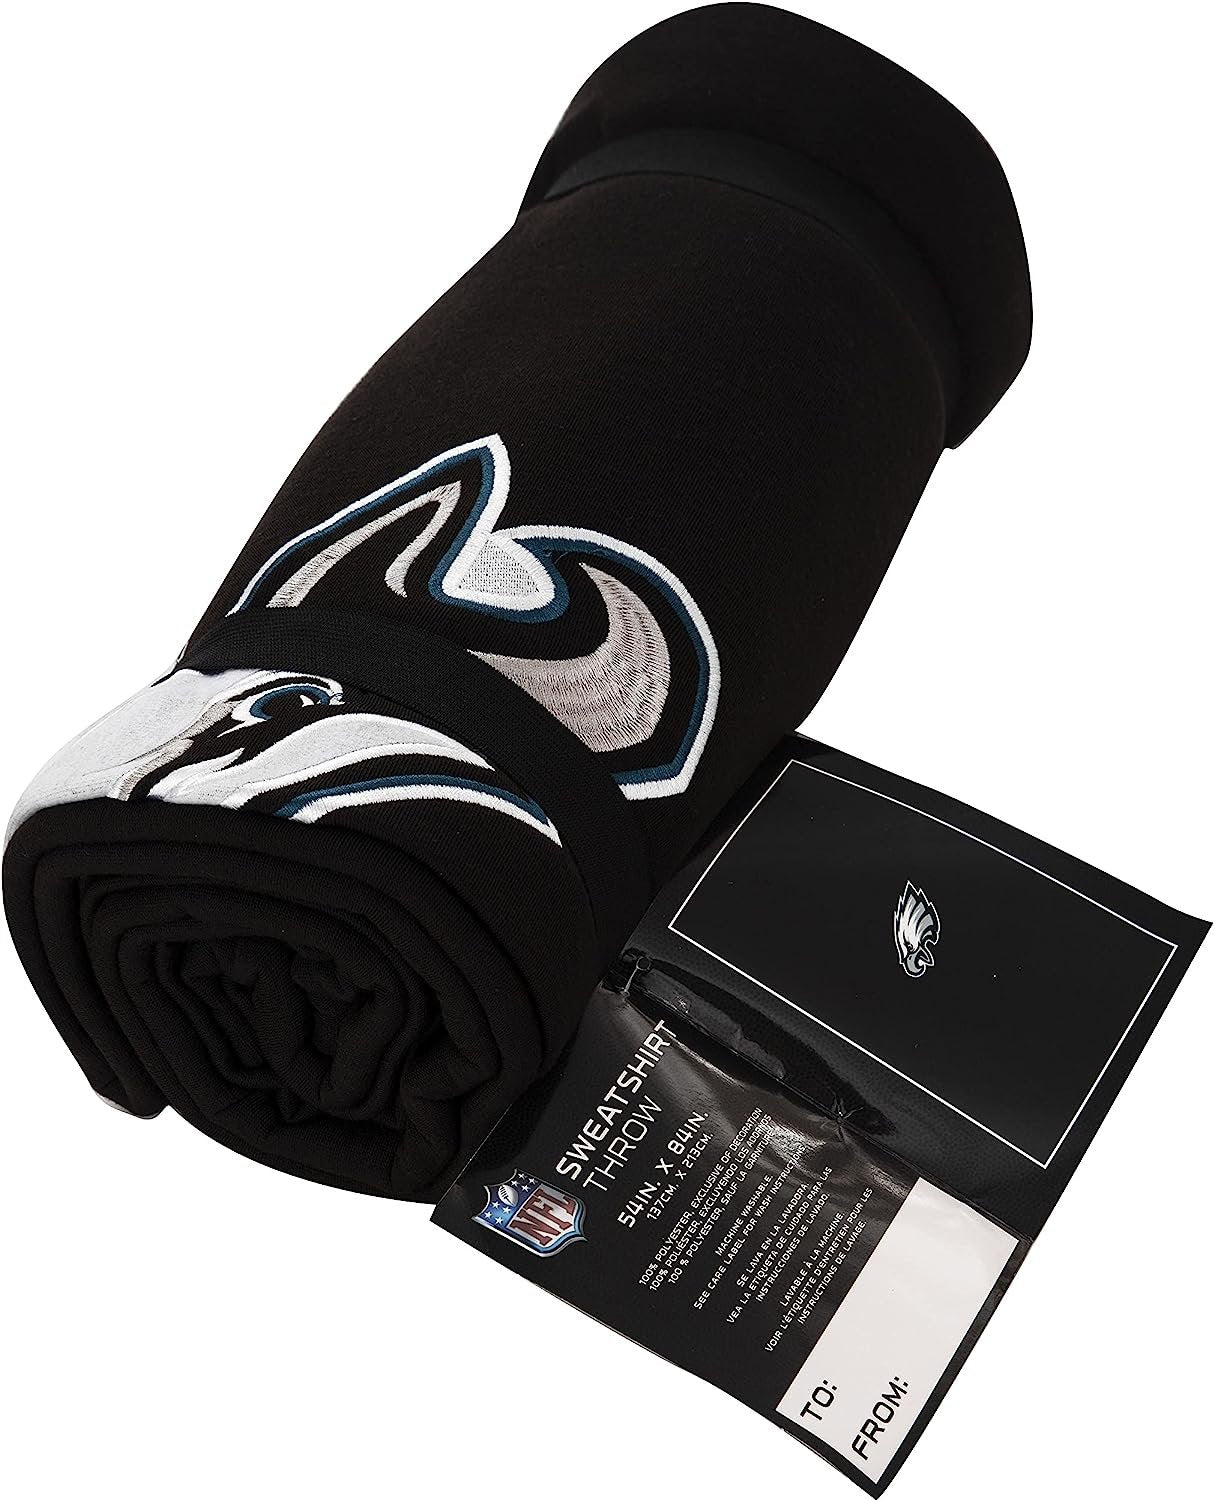 Philadelphia Eagles Throw Blanket, Sweatshirt Design, Embroidered Logo, Dominate Style, 54x84 Inch